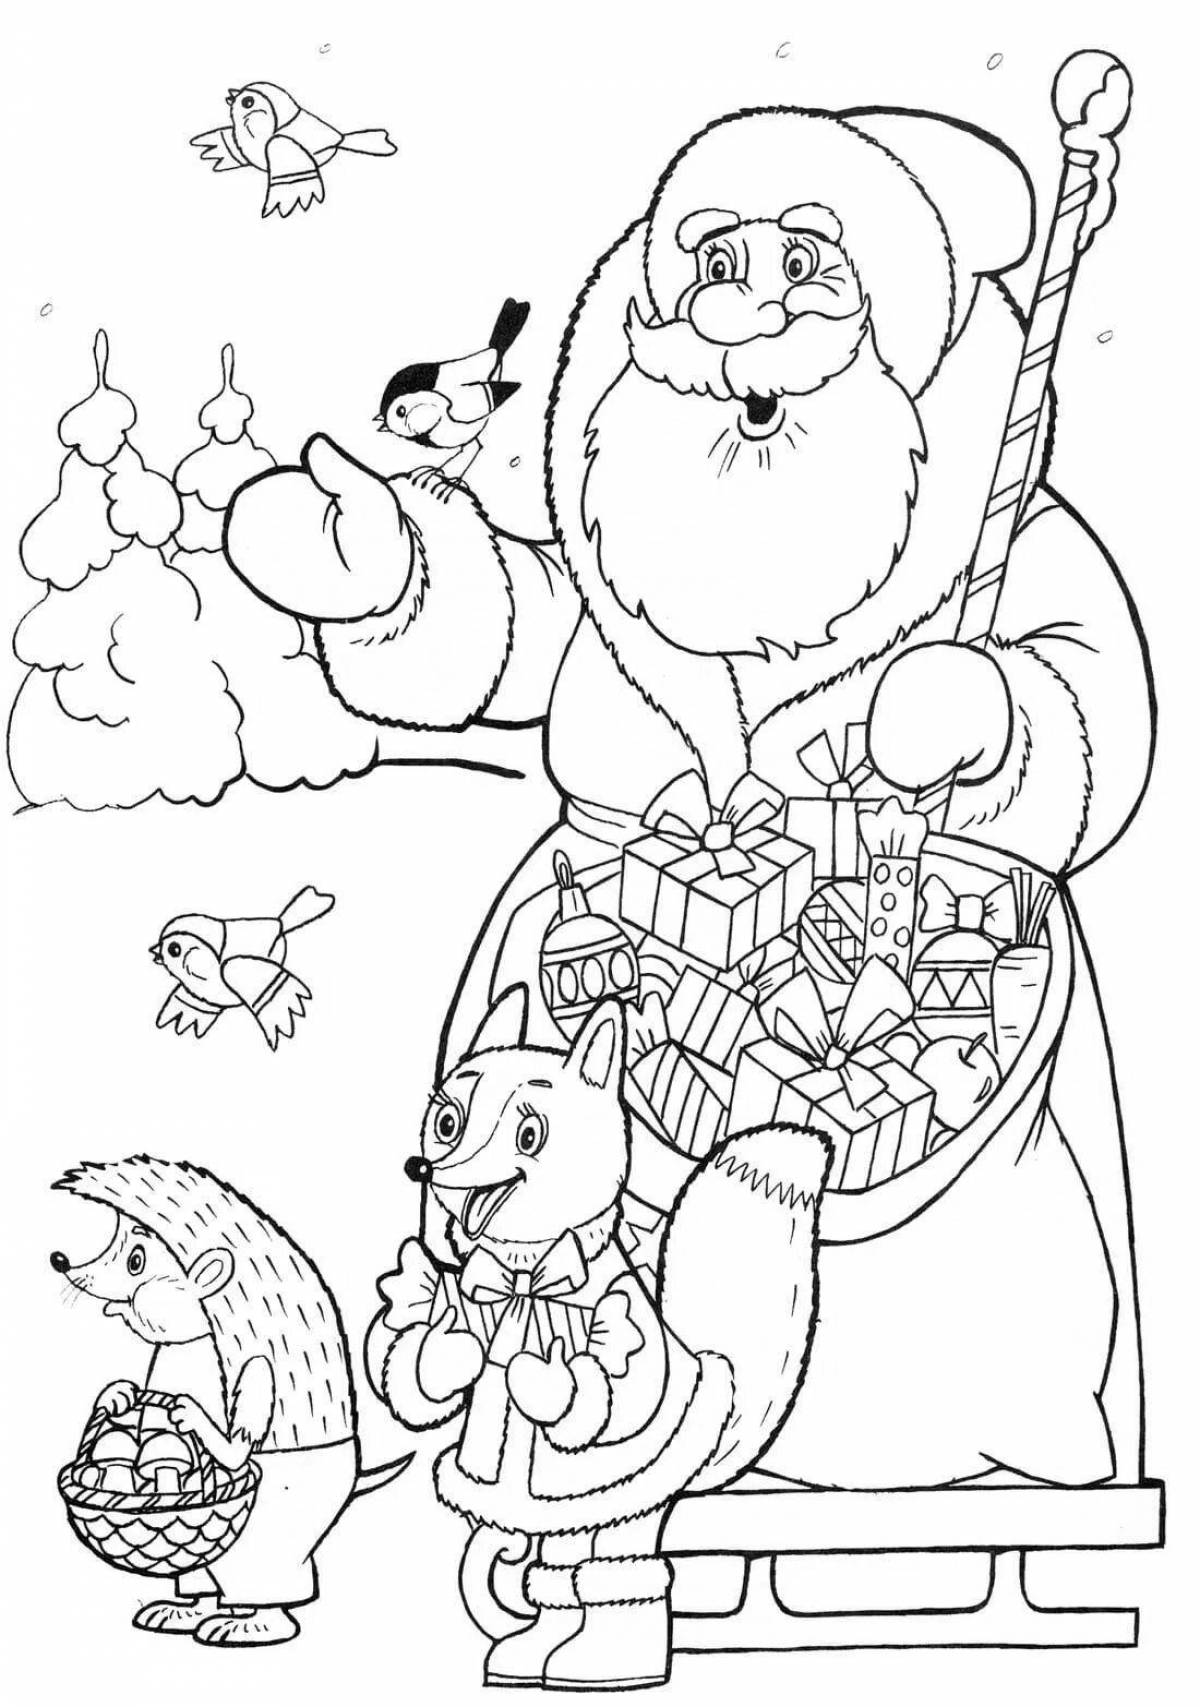 Fancy Santa Claus coloring page